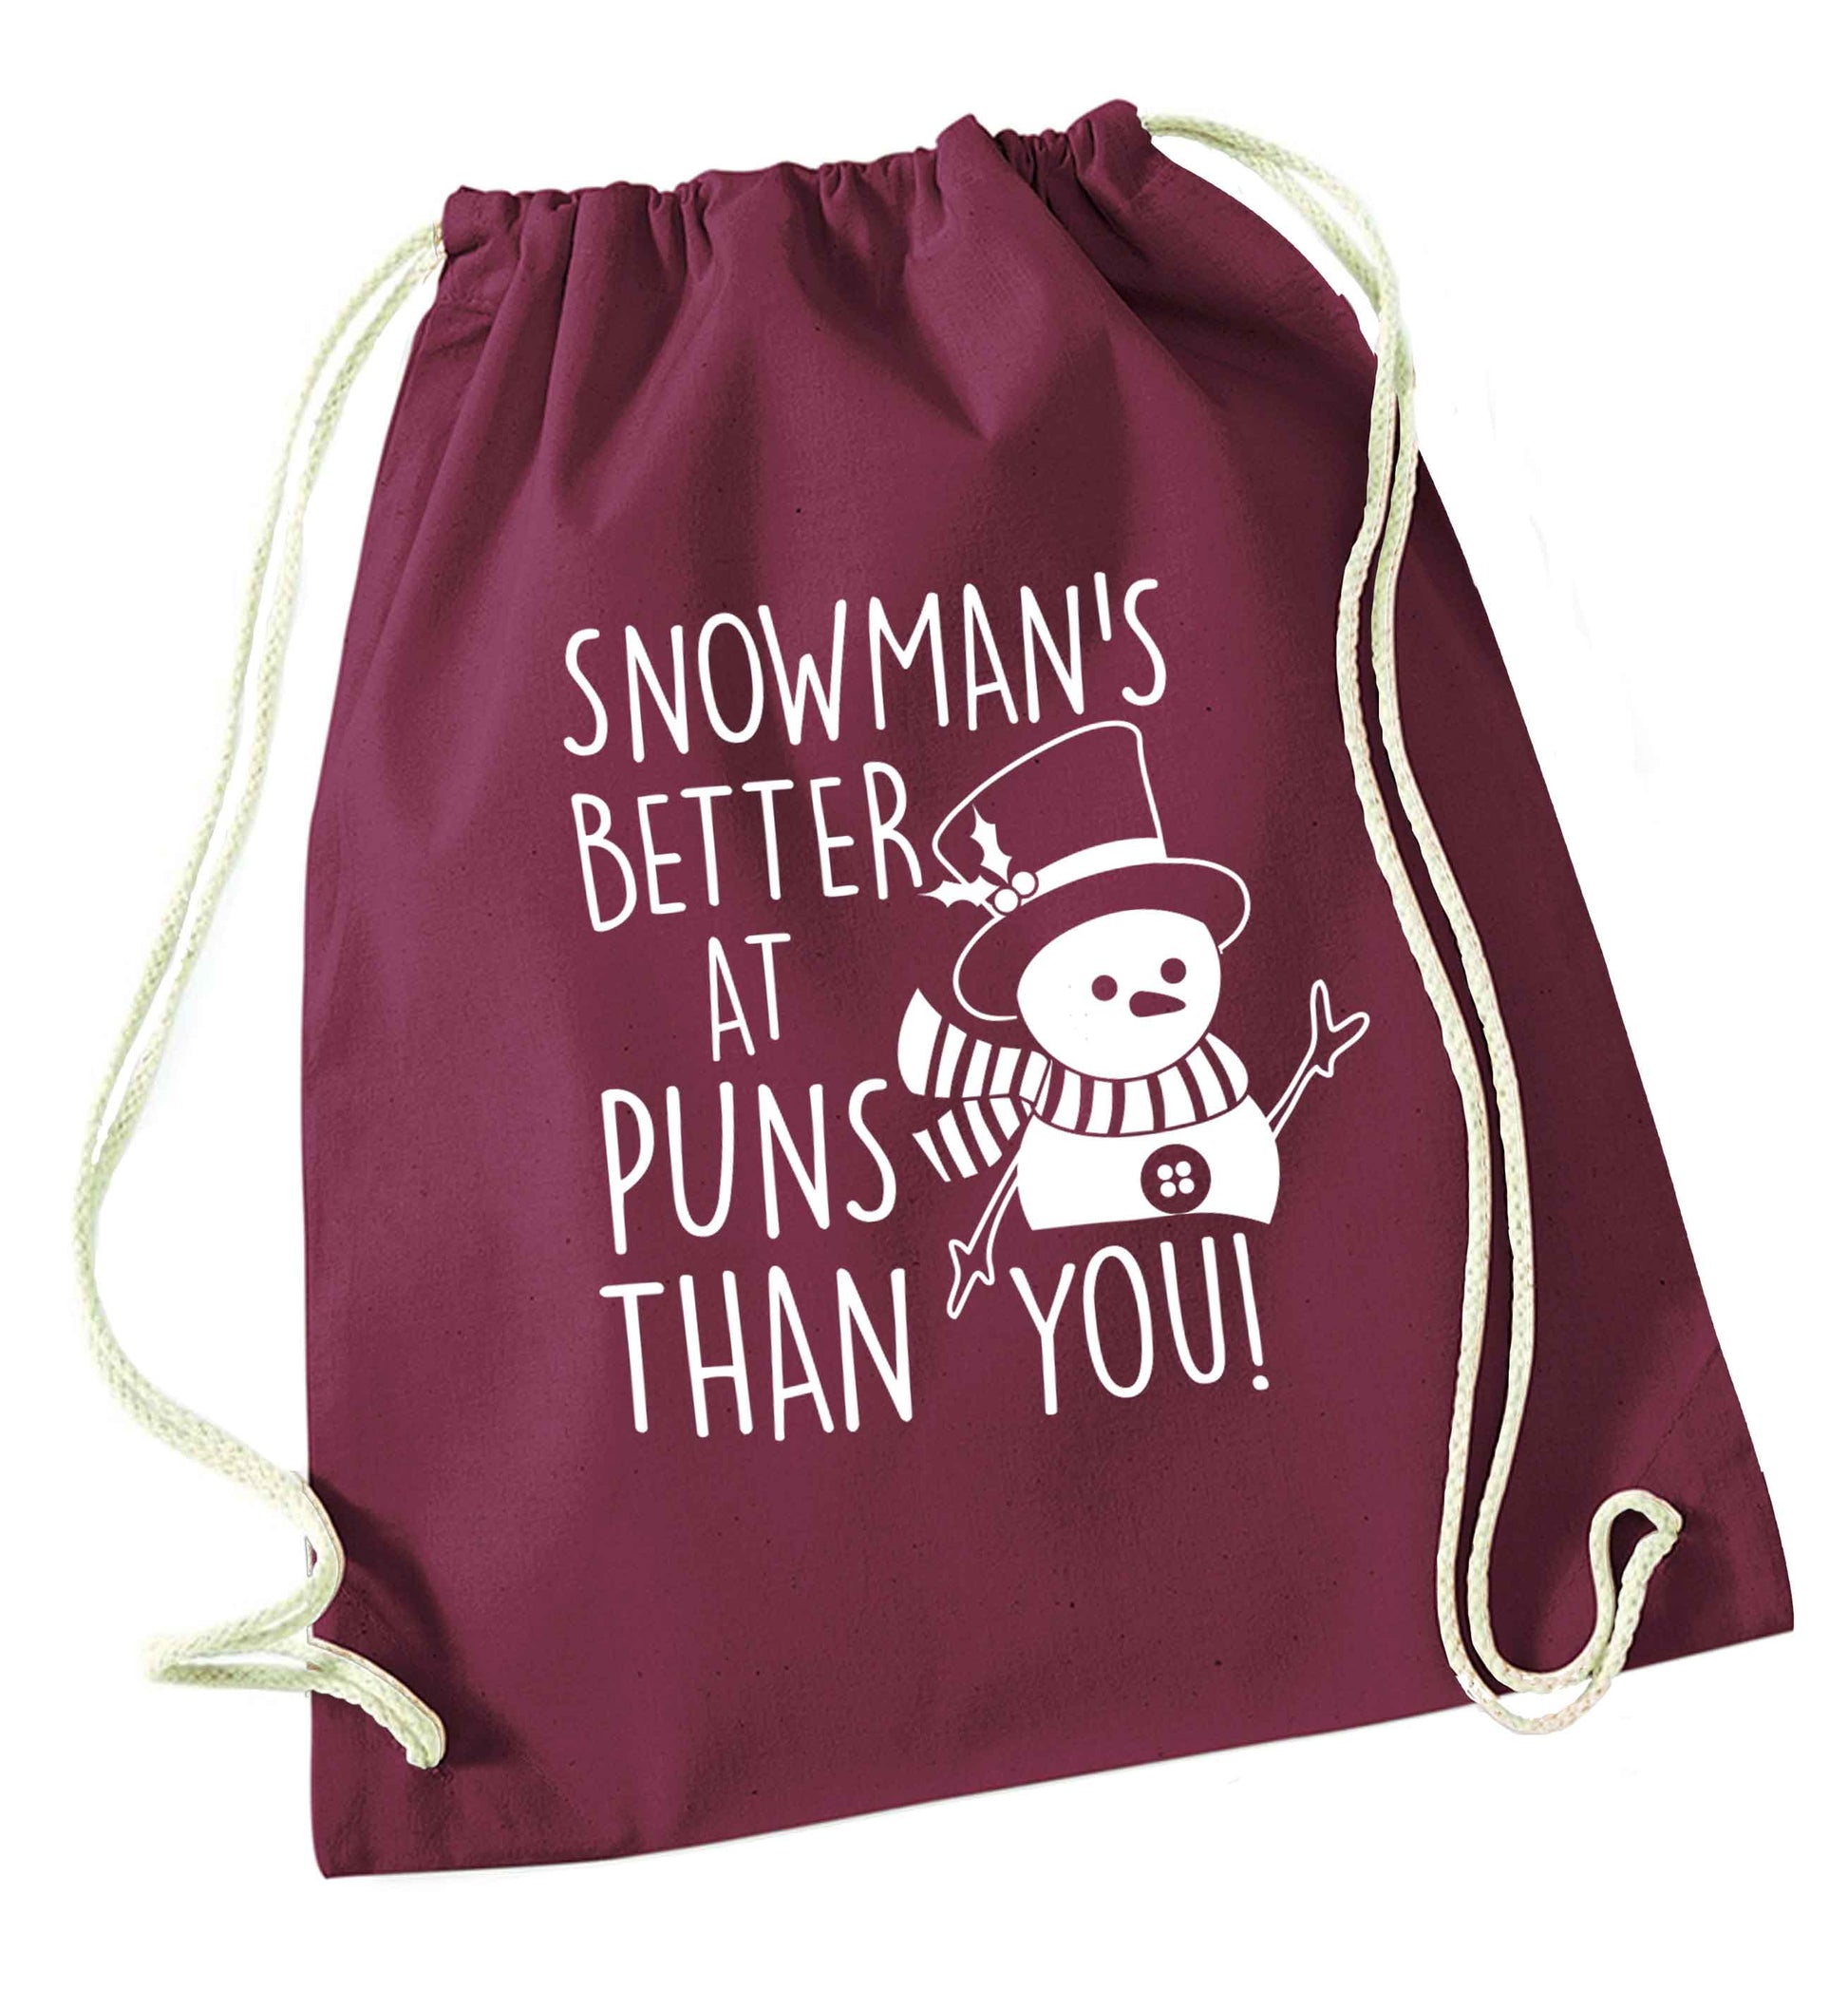 Snowman's Puns You maroon drawstring bag